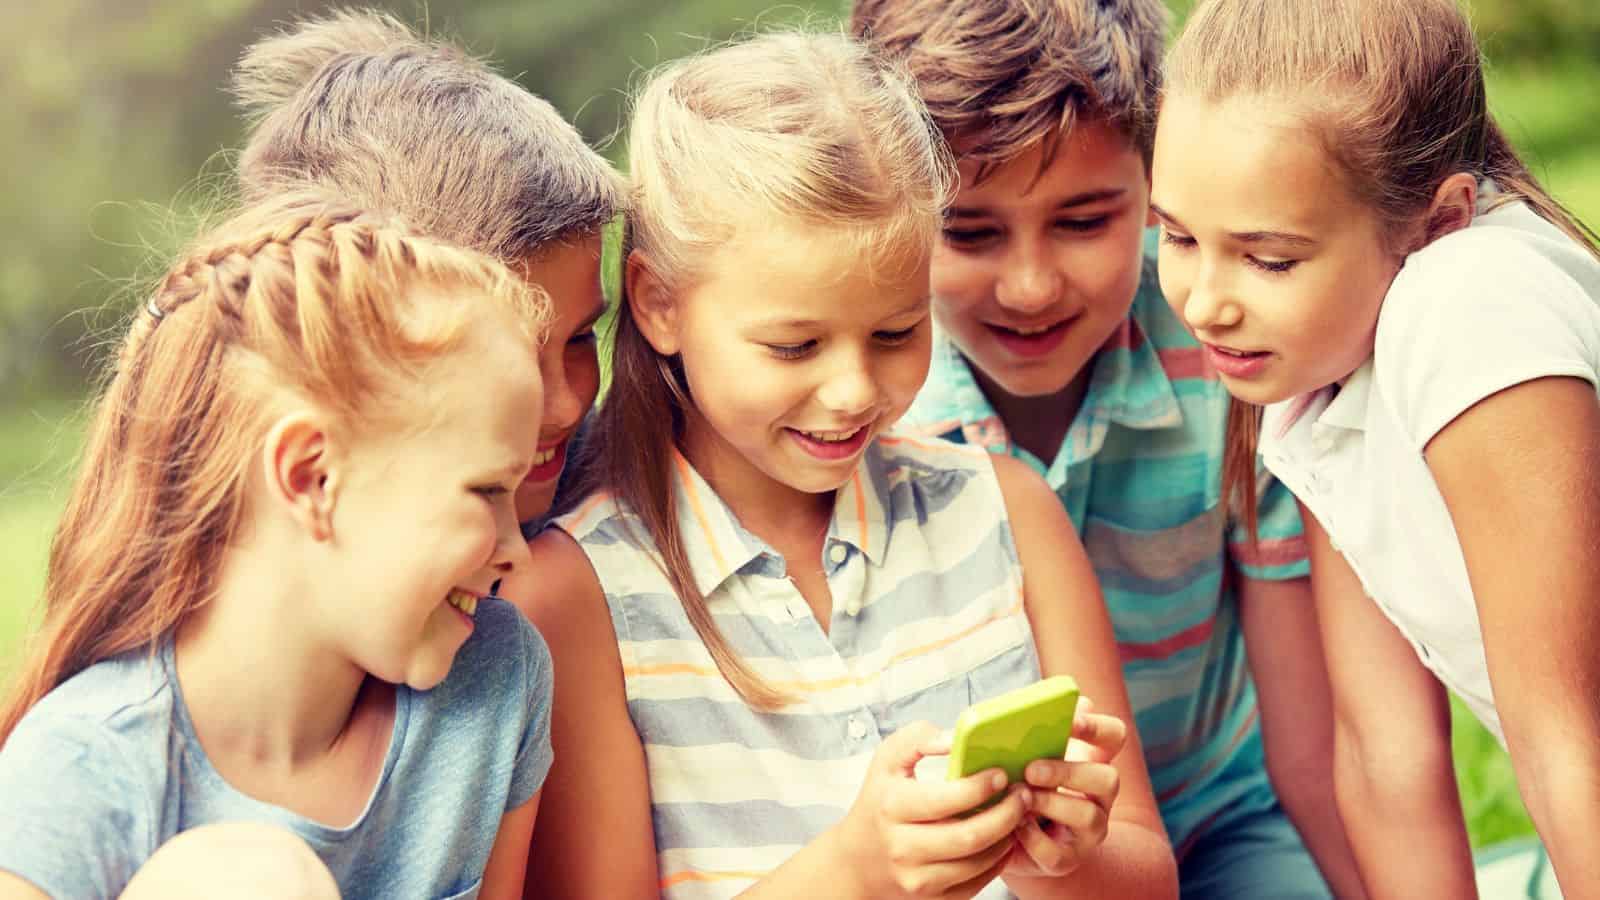 social media exploitation of children